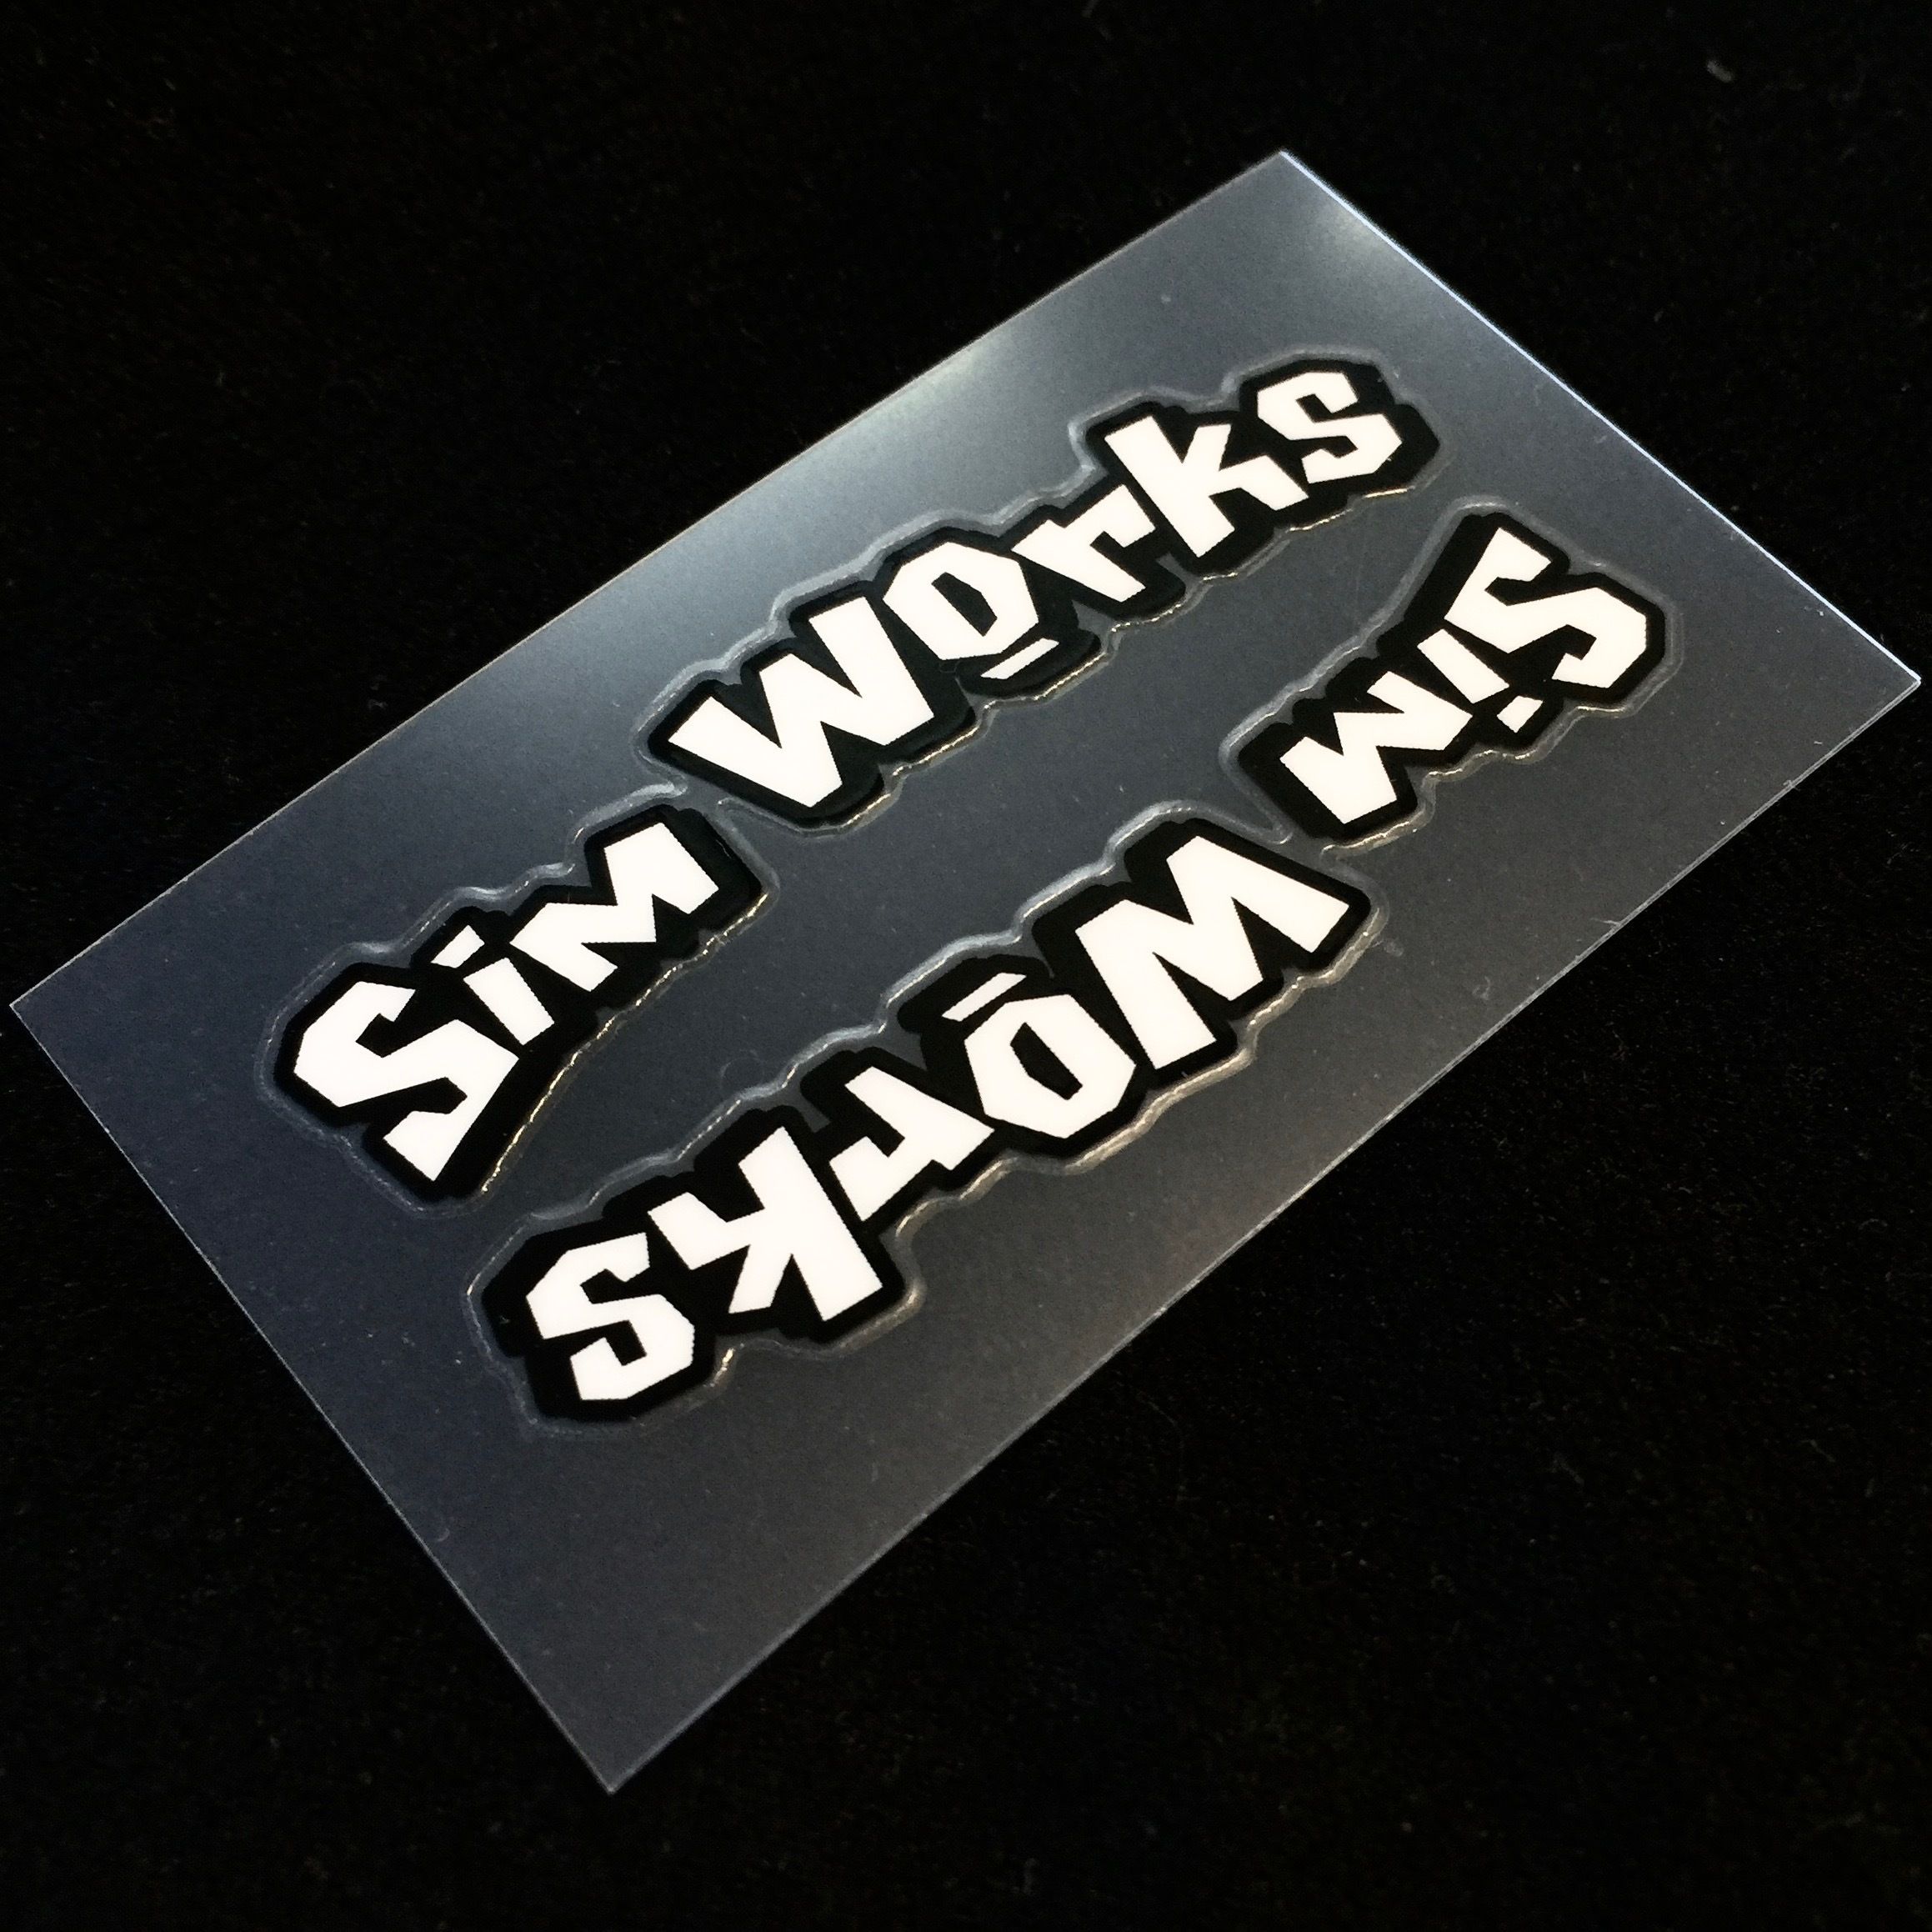 Spare logo decal for SIMWORKS stem